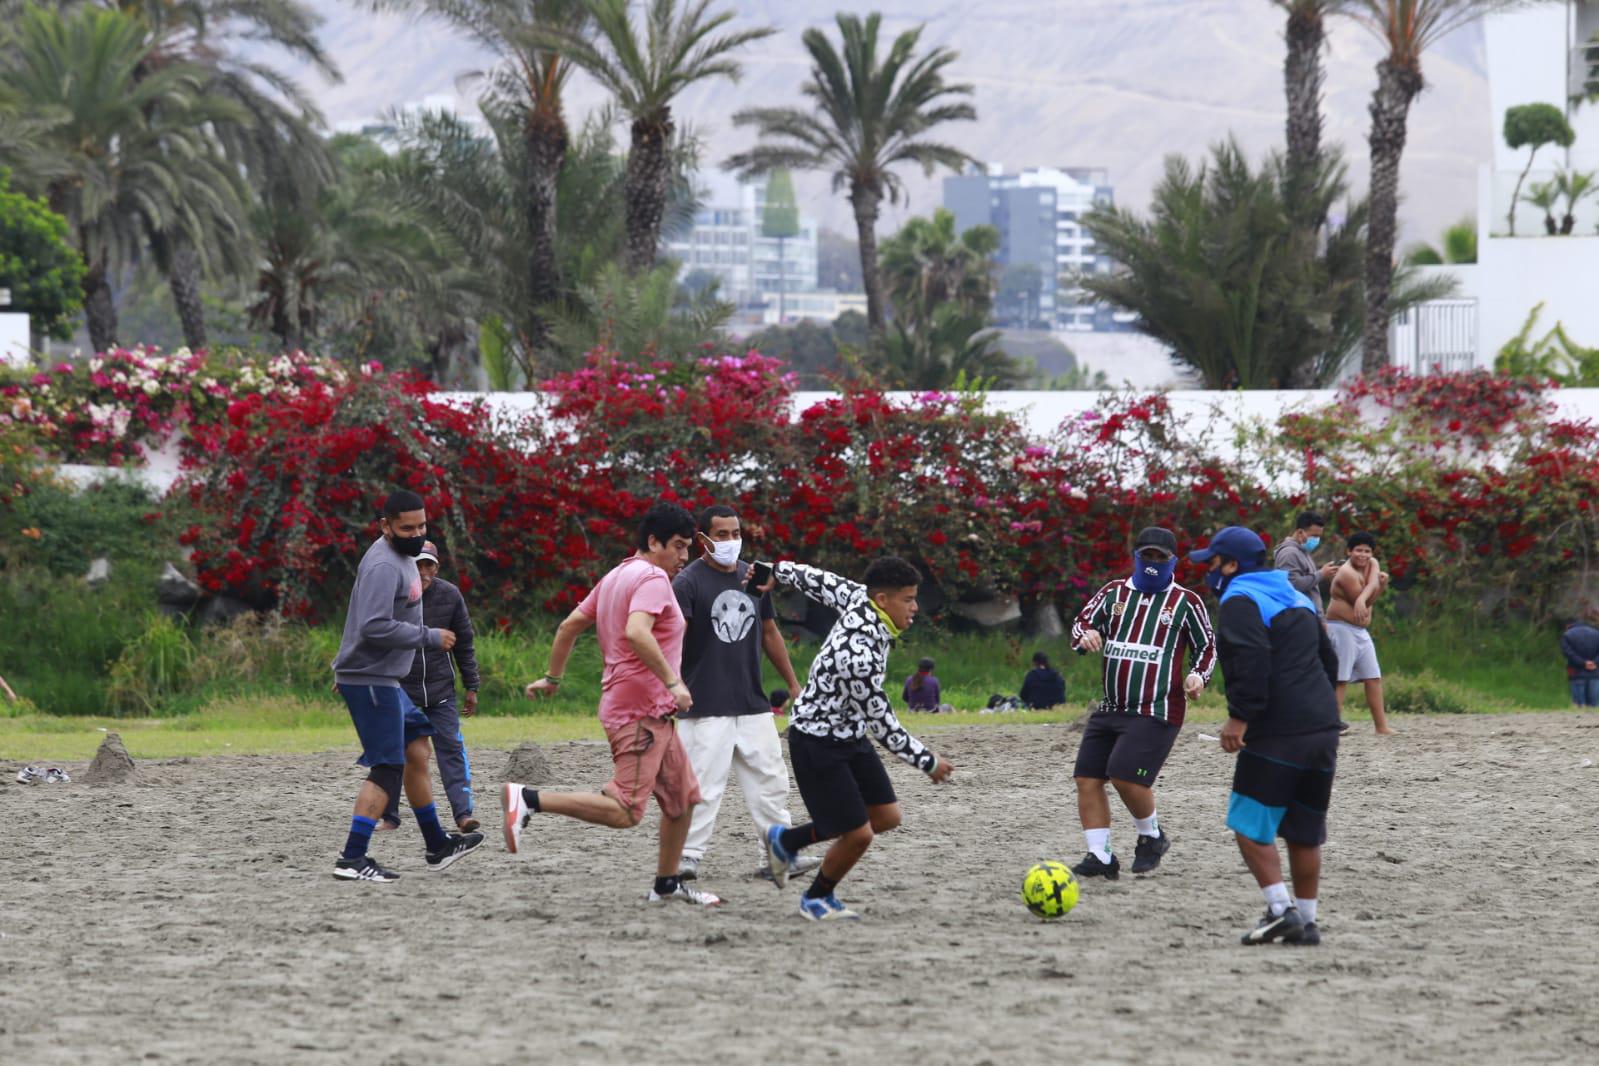 Las prácticas deportivas grupales están prohibidas a fin de prevenir contagios de COVID-19. (Fotos: Jessica Vicente/@photogec)